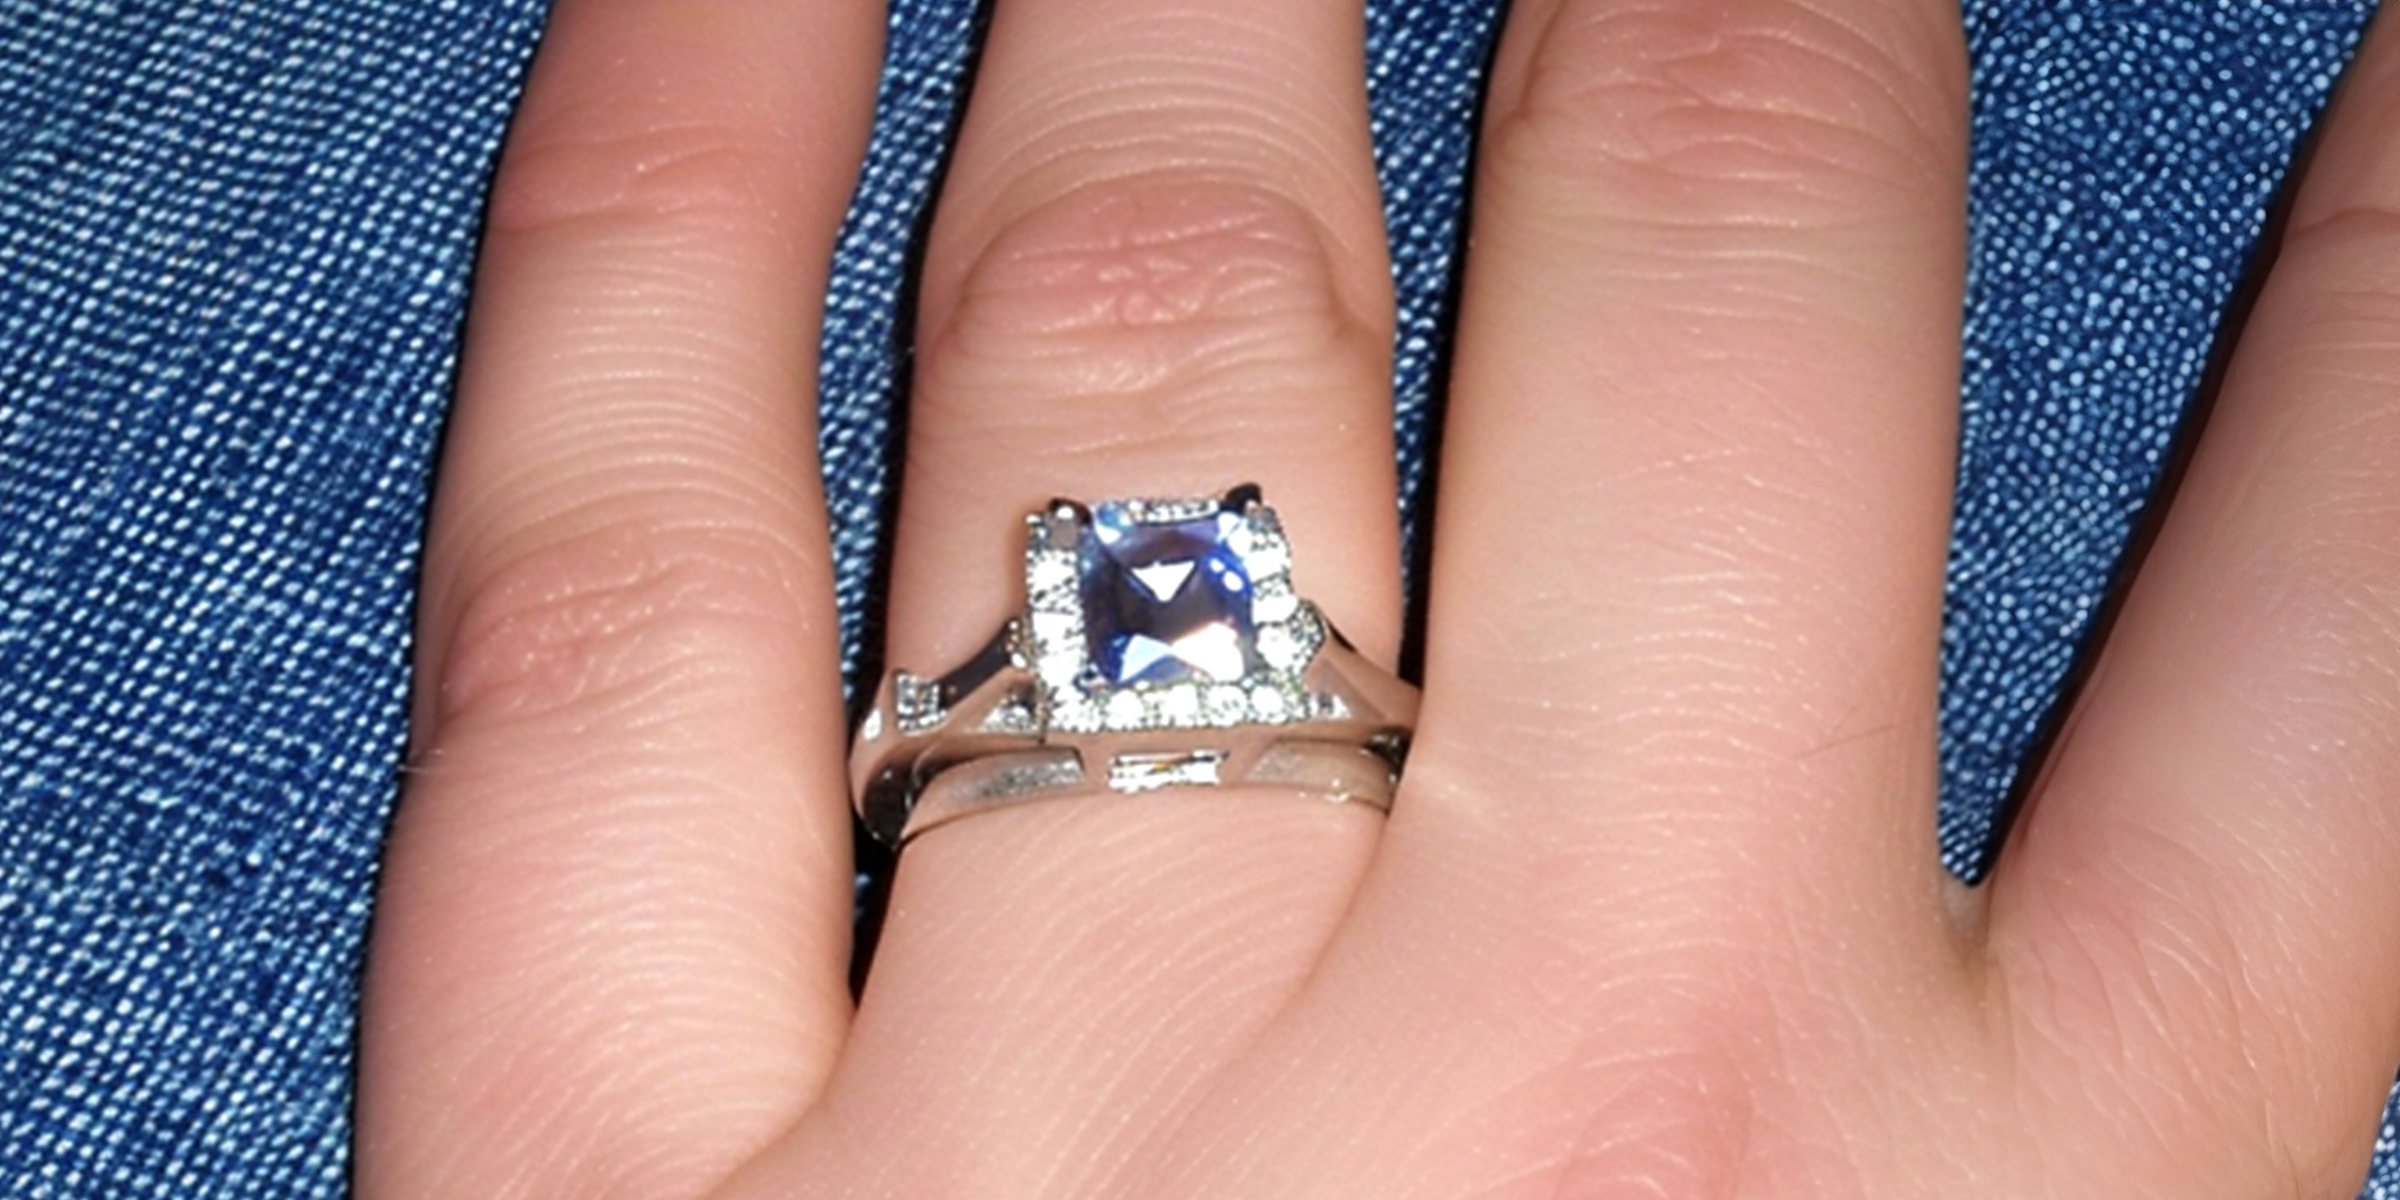 A diamond ring | Source: Amomama